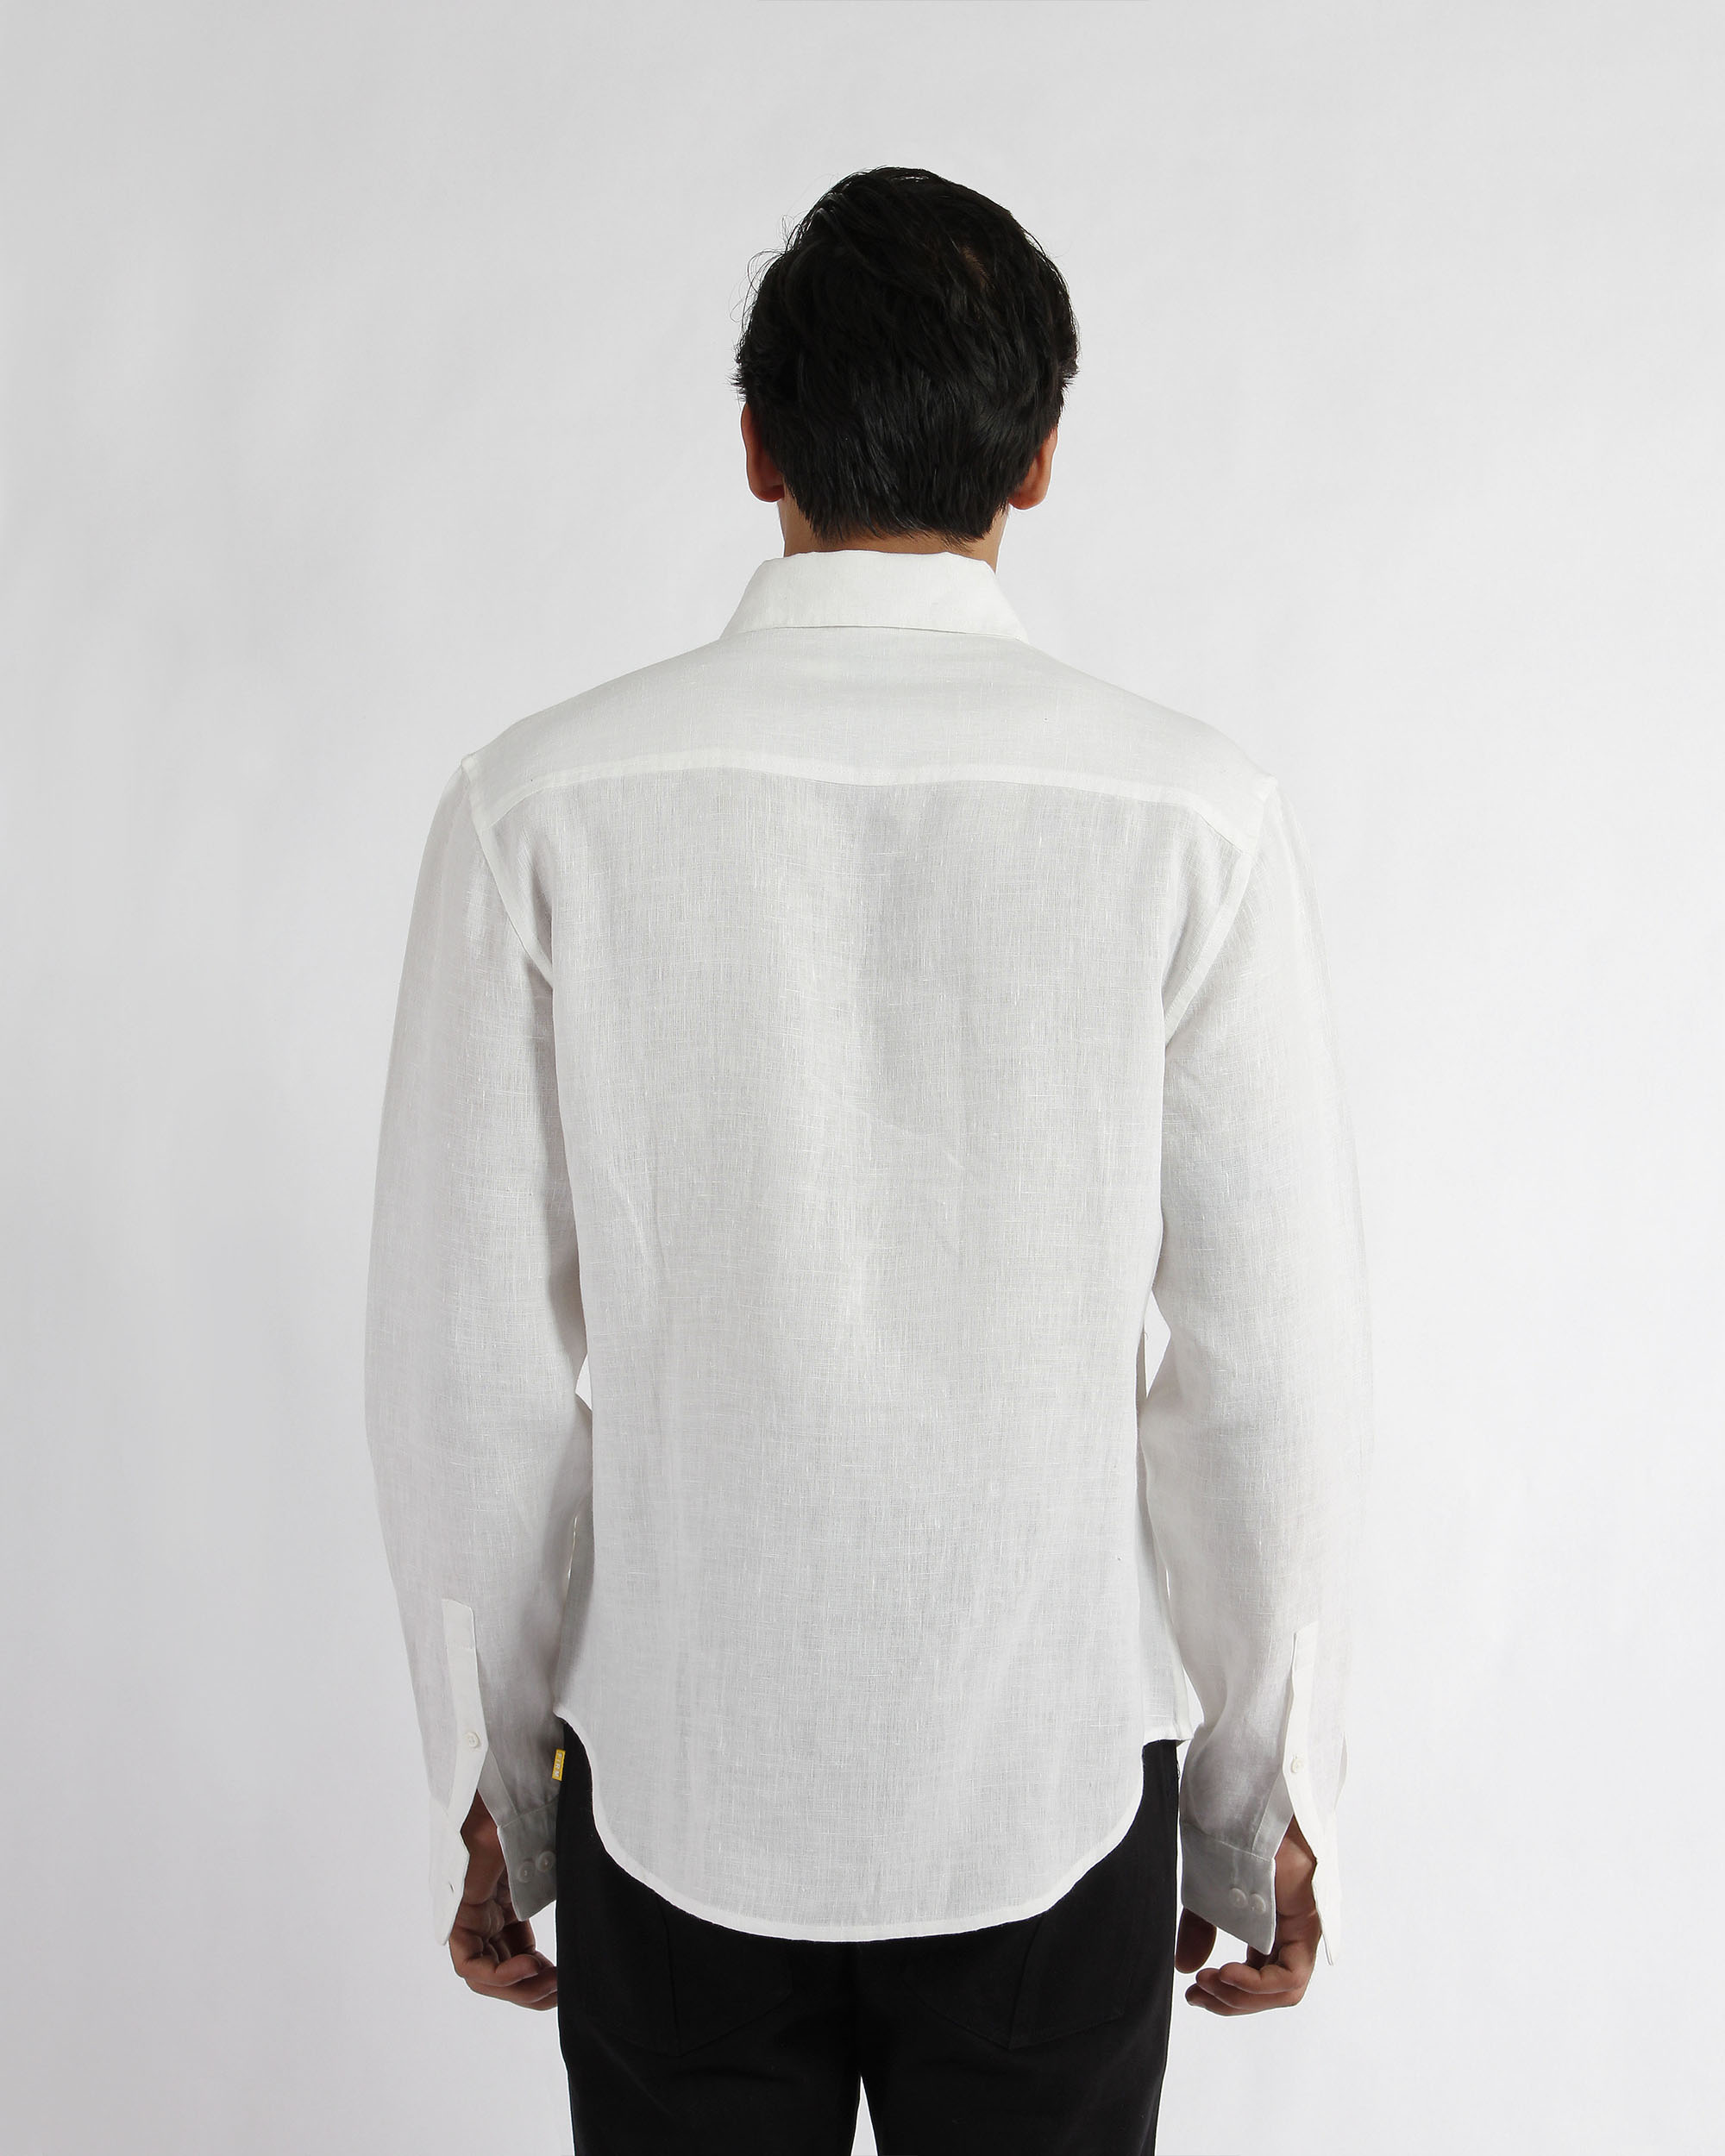 White linen button-down collar shirt by Dhatu Design Studio | The ...